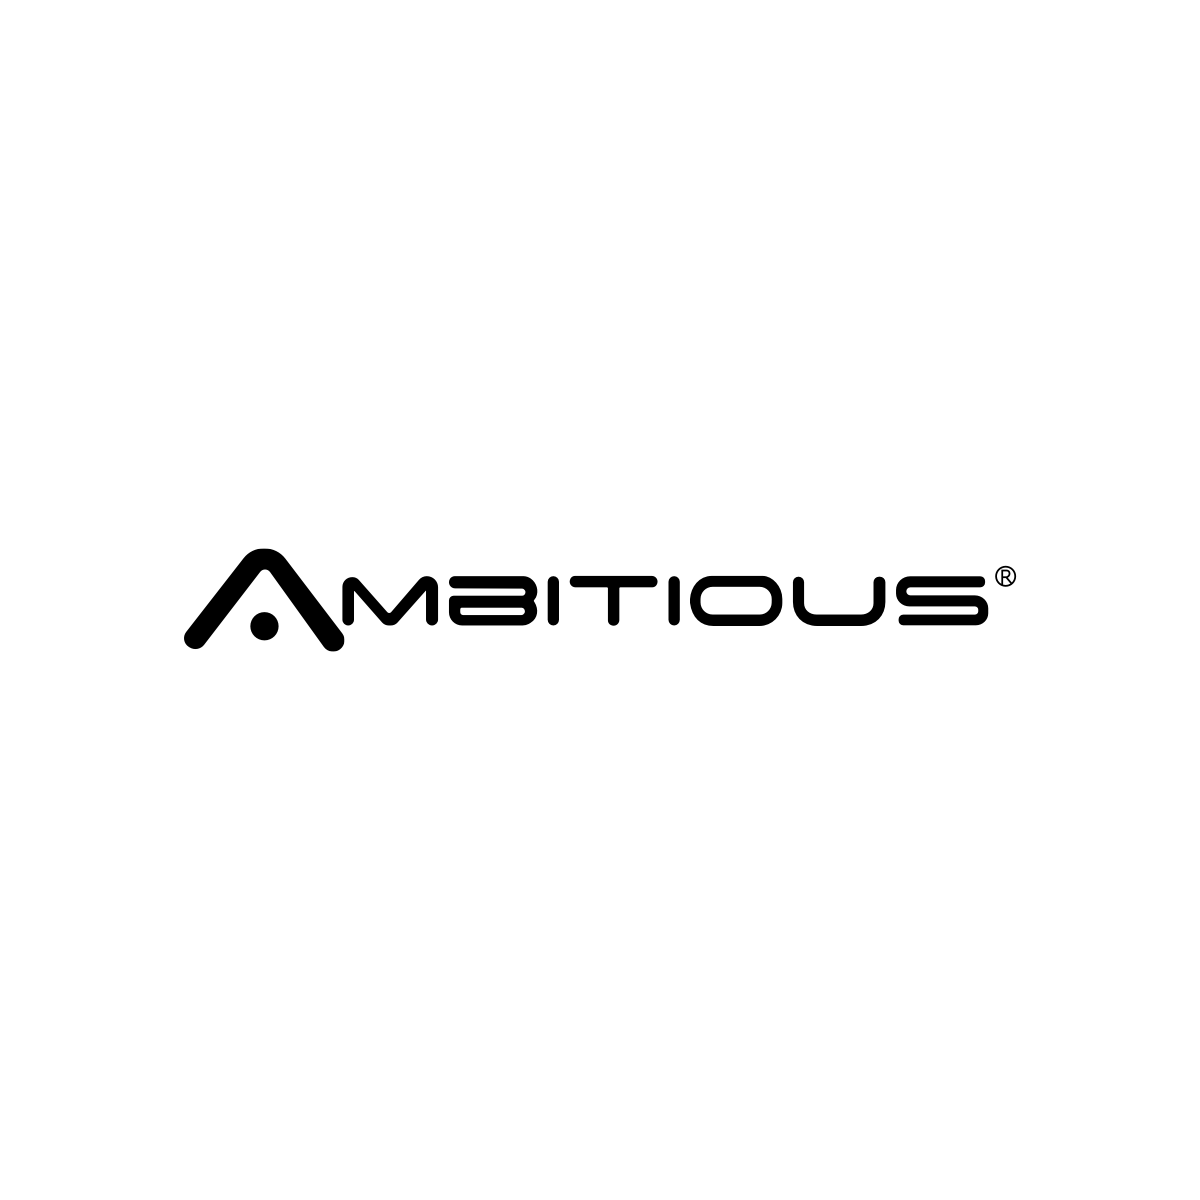 Beautiful Ambition Pictures logo design | Utopia branding agency